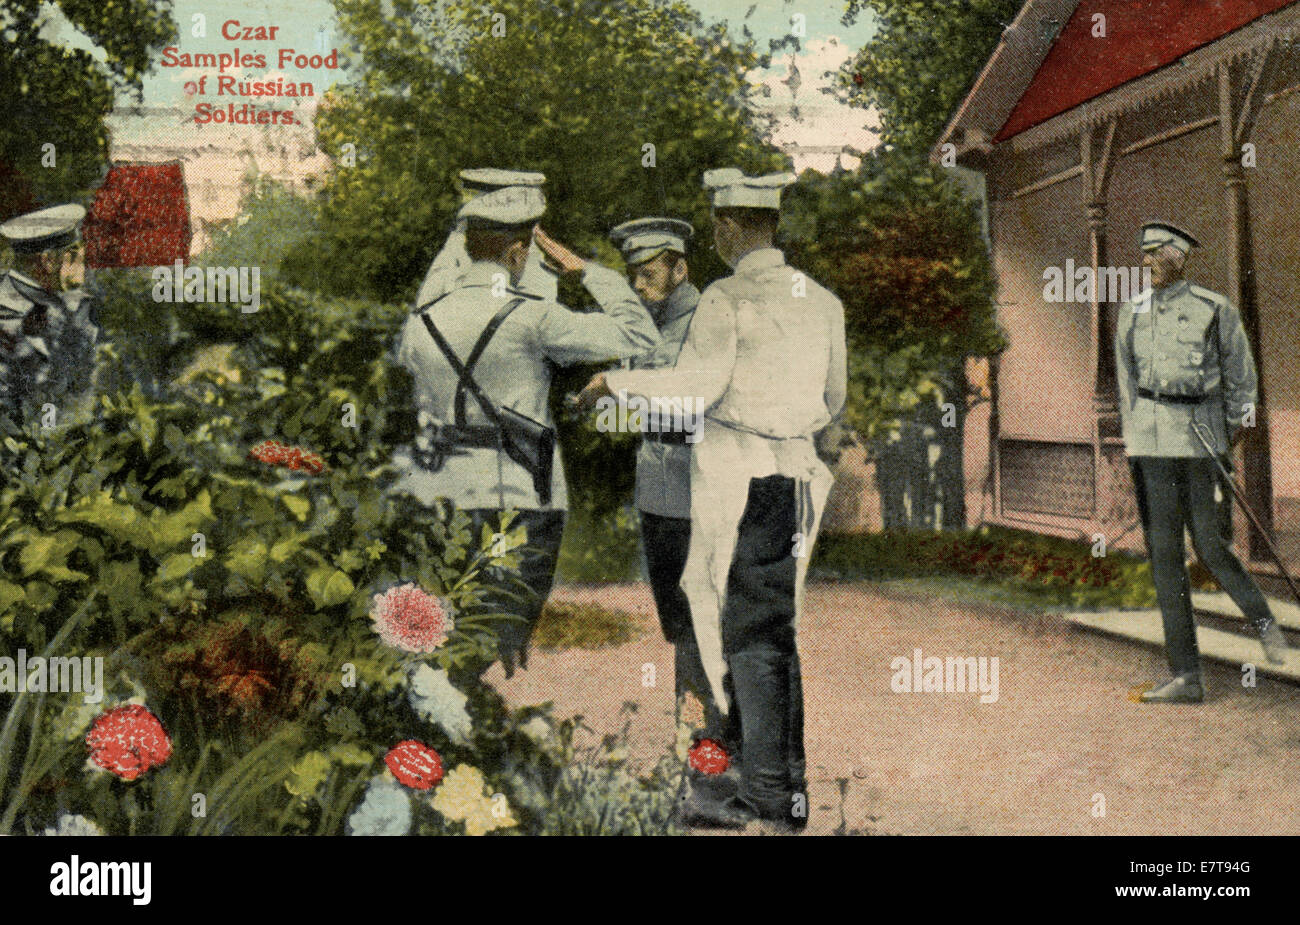 Le Tsar Nicholas II alimentation échantillons de soldats russes, vers 1914 Banque D'Images